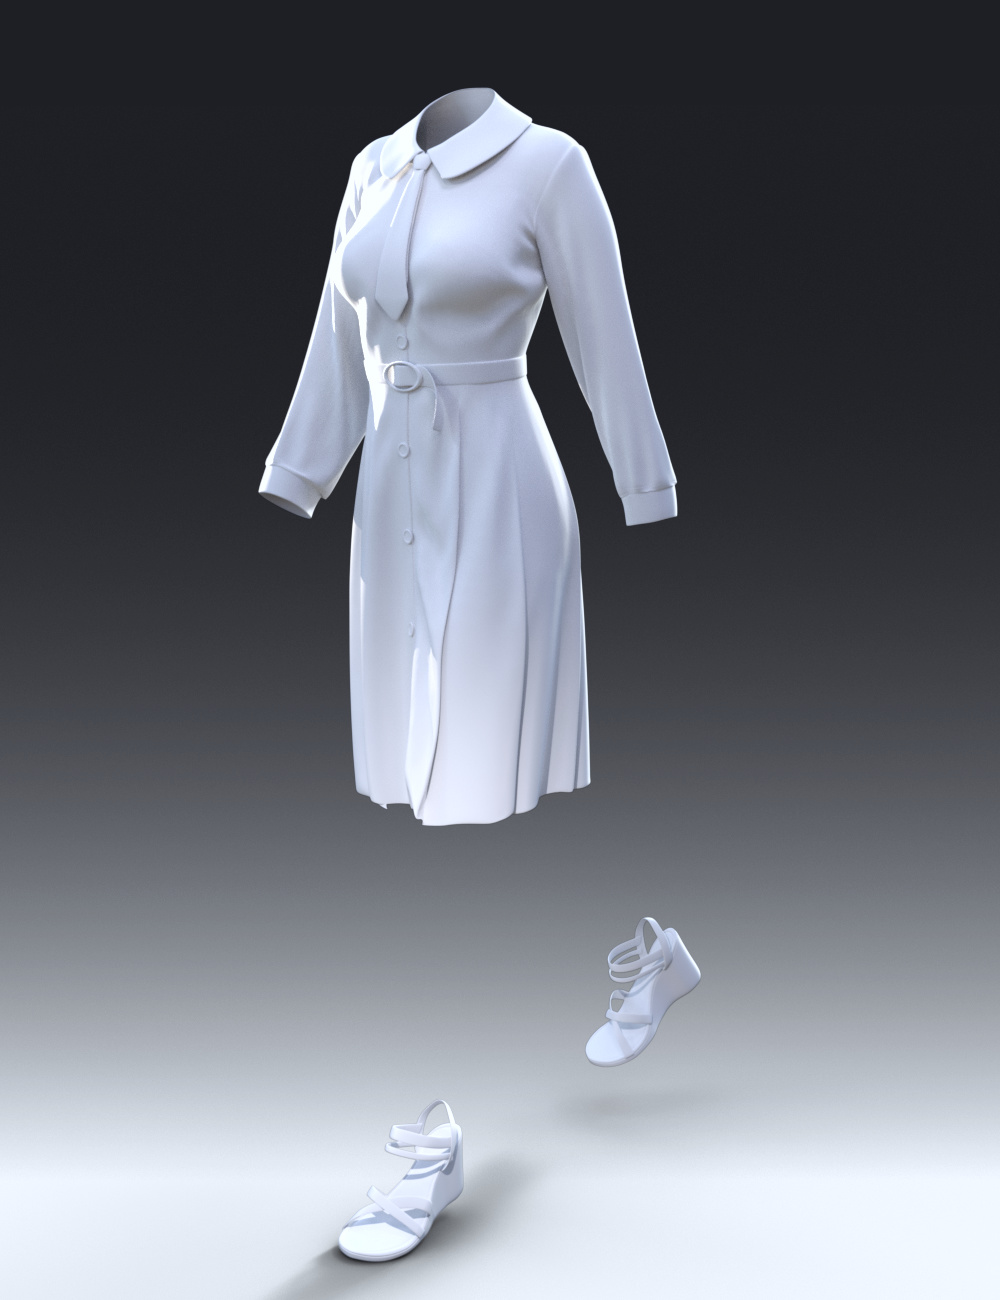 dForce Autumn Coat Dress Outfit for Genesis 8 Females by: tentman, 3D Models by Daz 3D